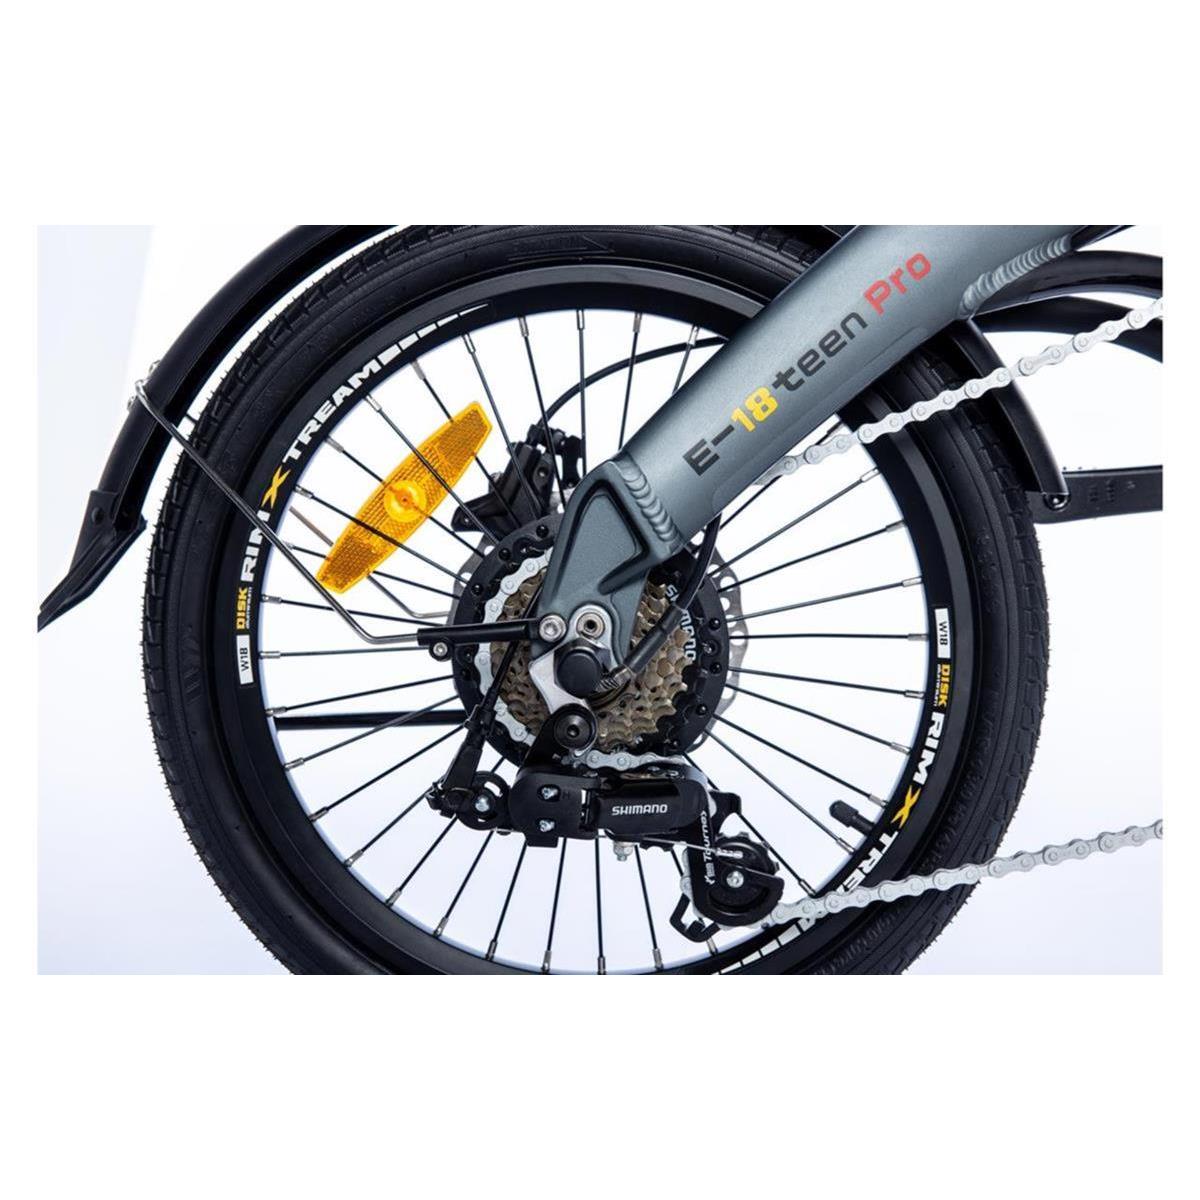 Bicicleta Electrica Plegable, Moma Bikes E18teen, Aluminio. Shimano 7v. Bat. Ion Litio 36v 9ah  MKP